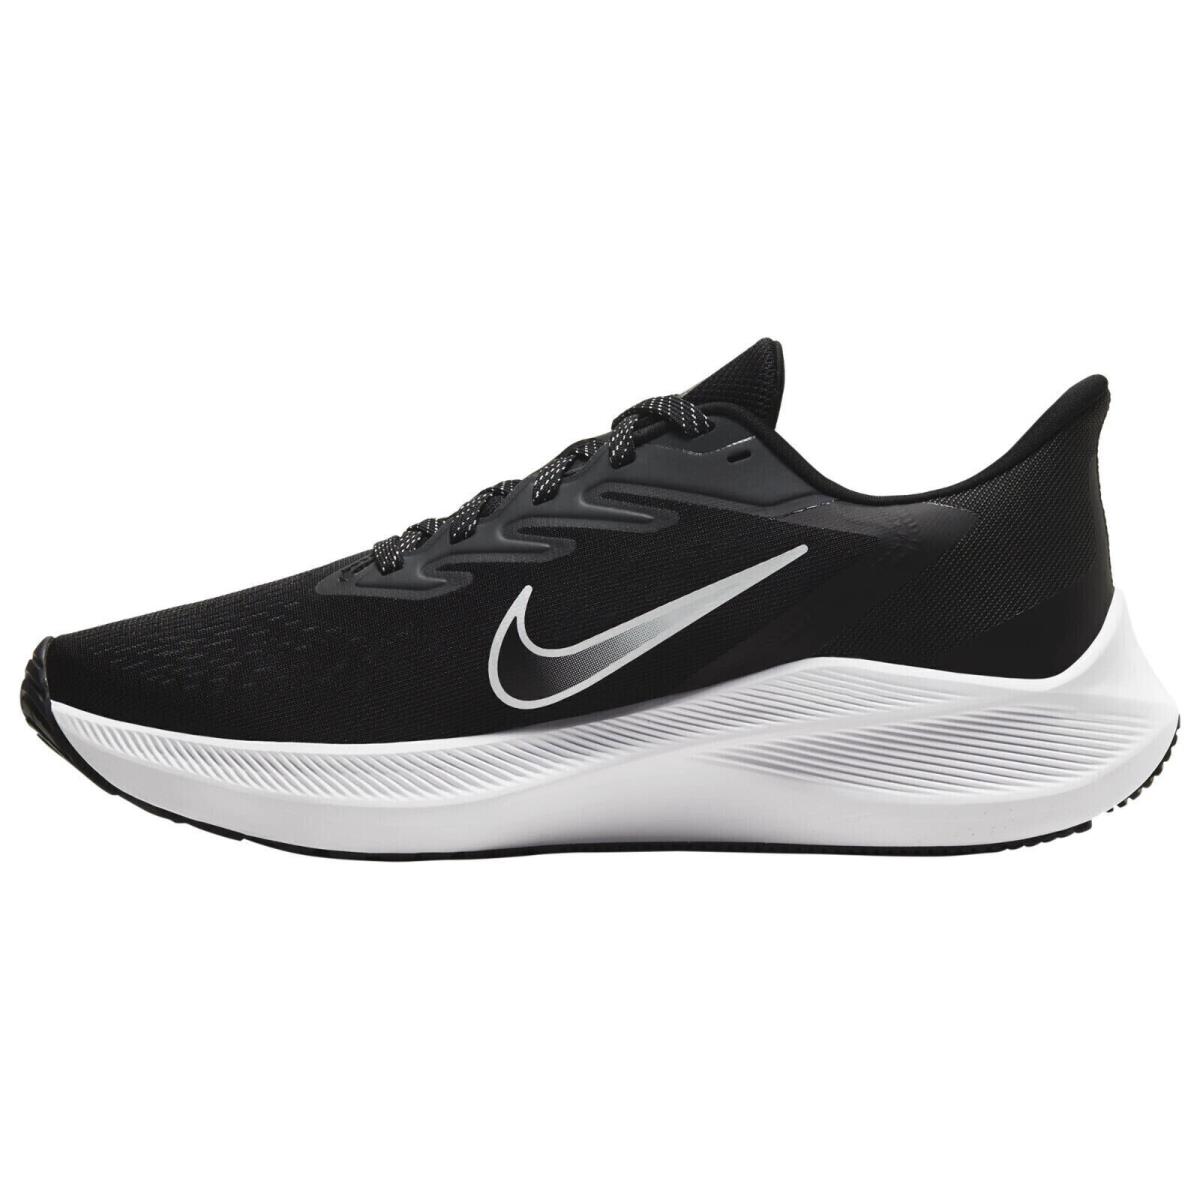 Nike shoes Zoom Winflo - Black 7